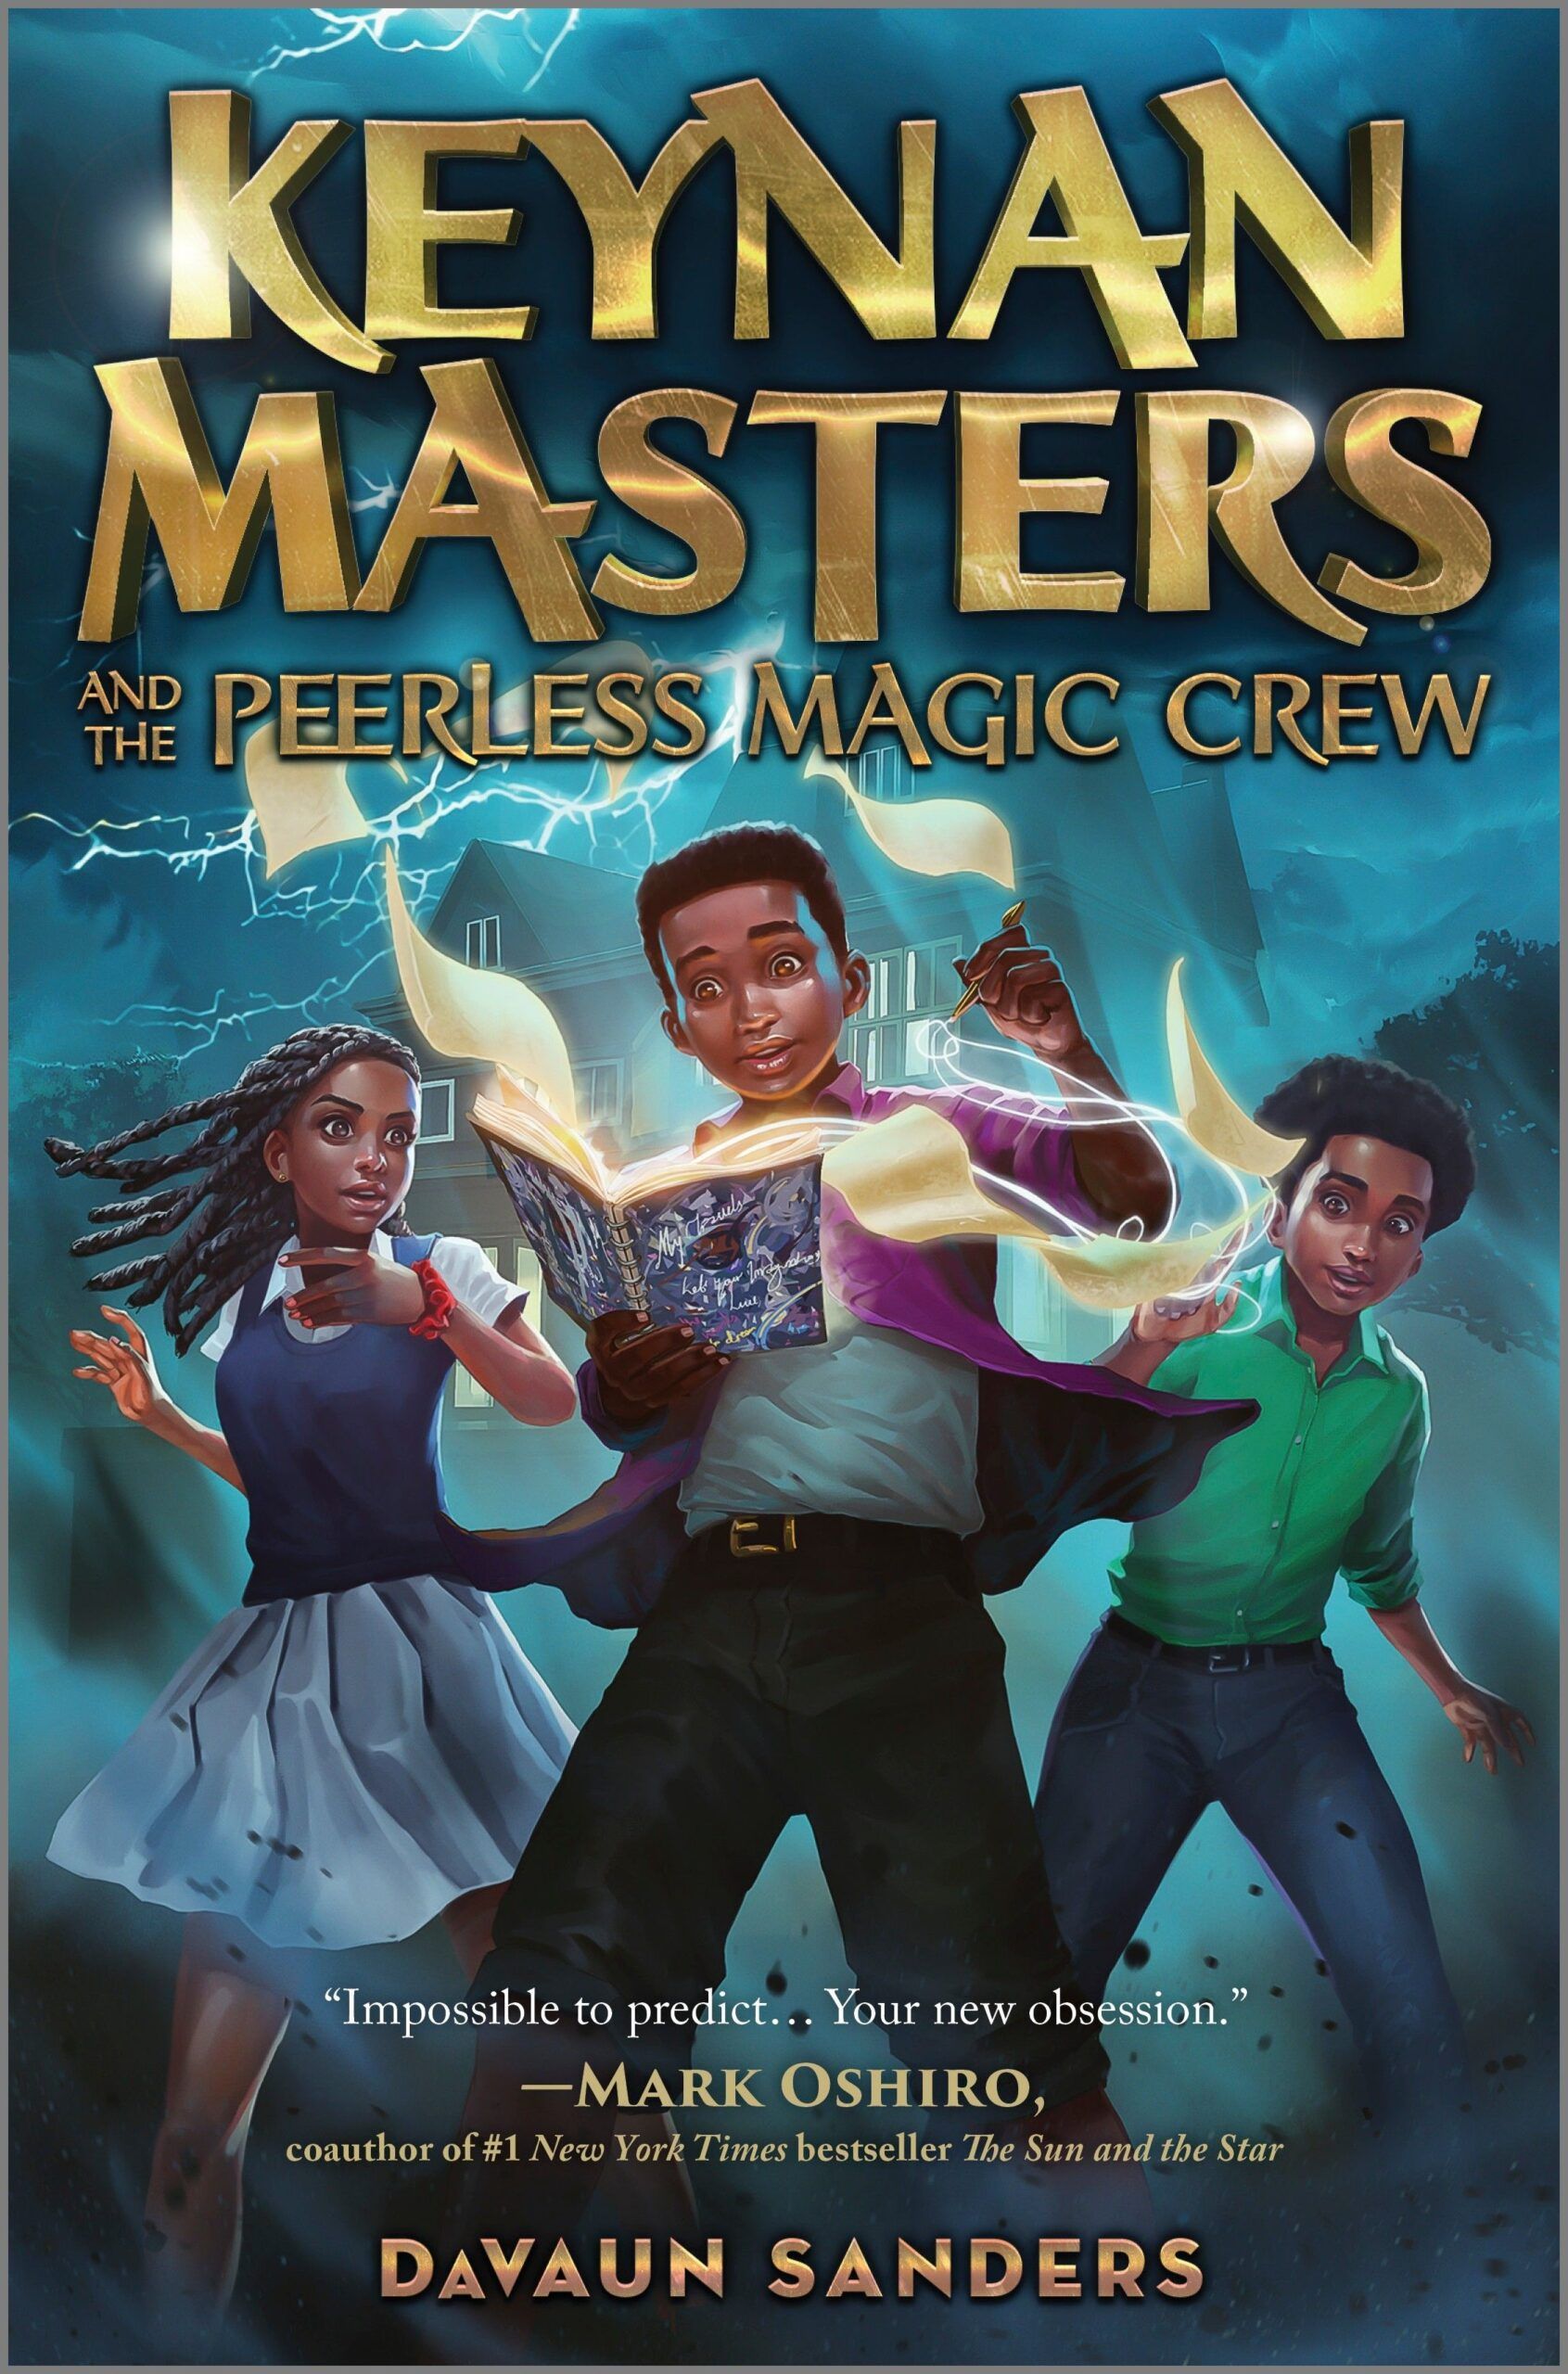 Book cover of Keynan Masters and the Peerless Magic Crew by DaVaun Sanders